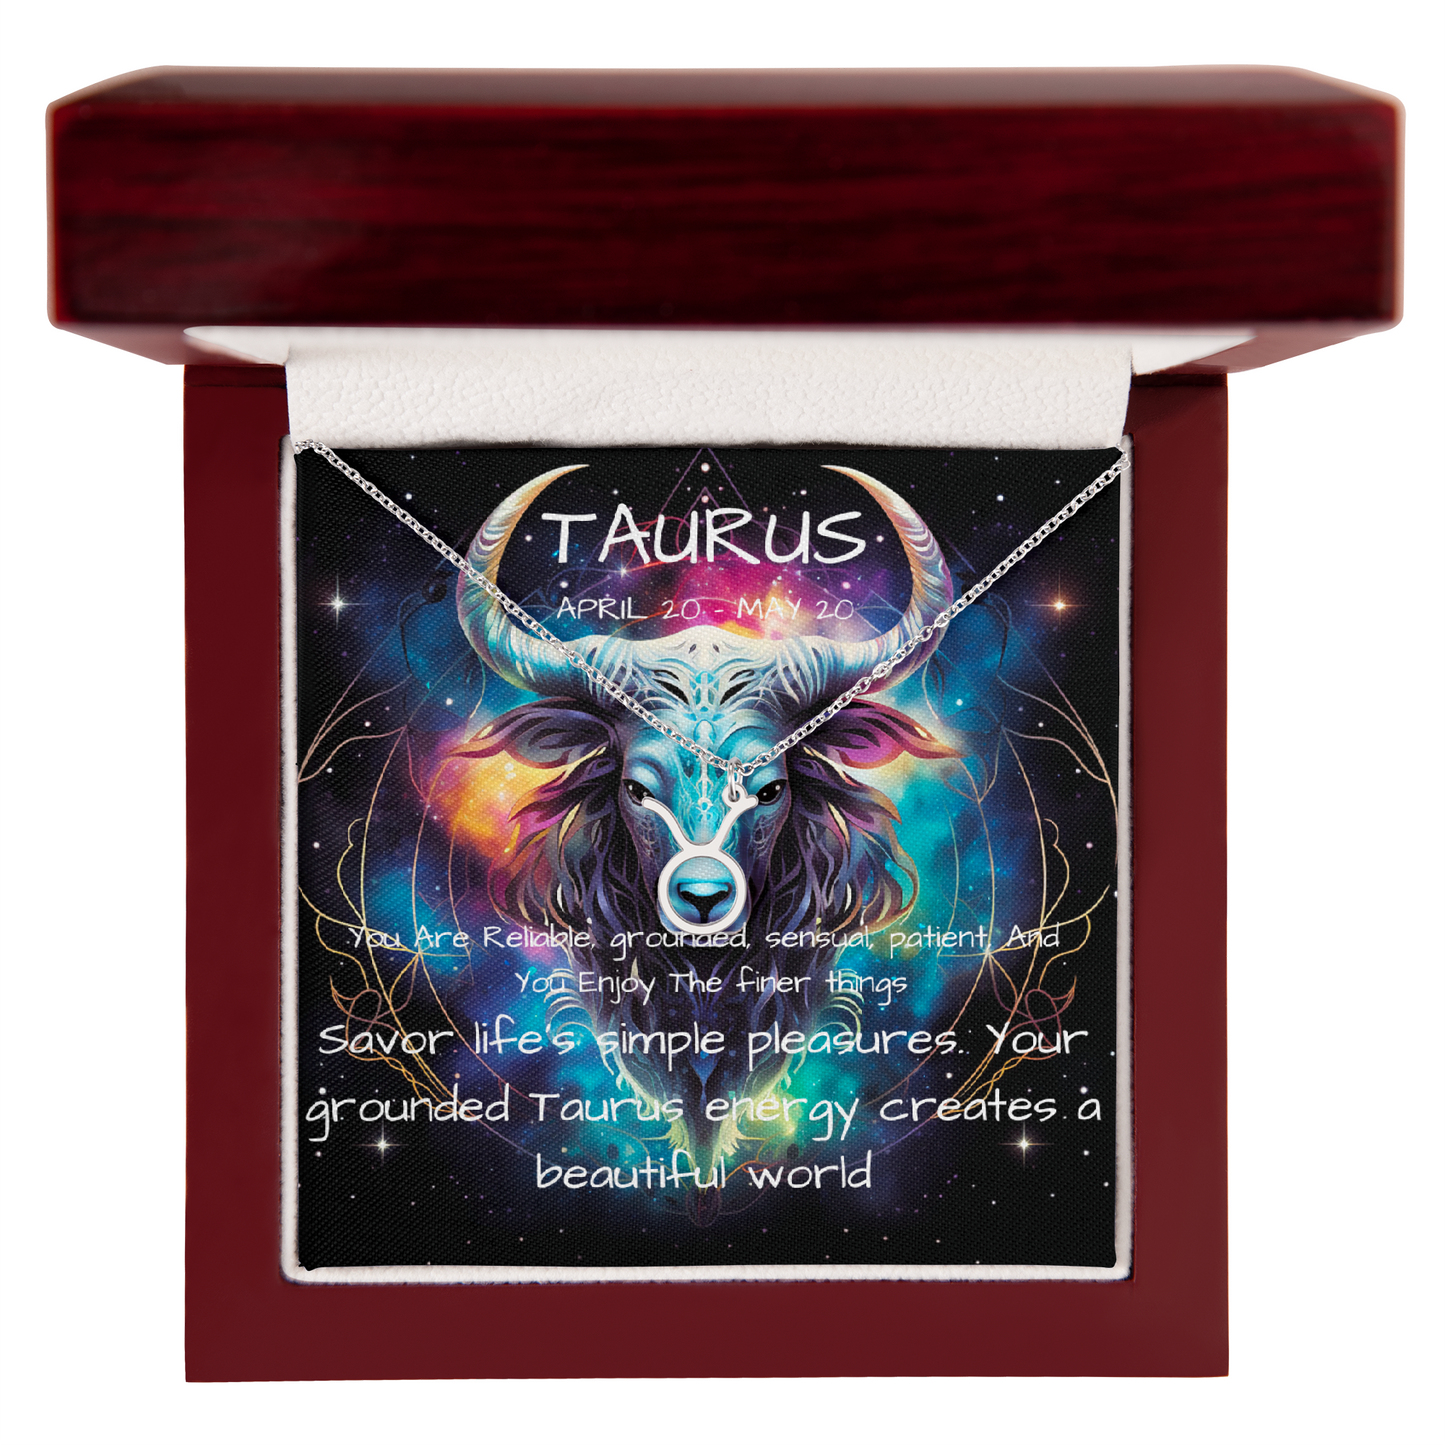 Taurus pendant necklace luxury box silver